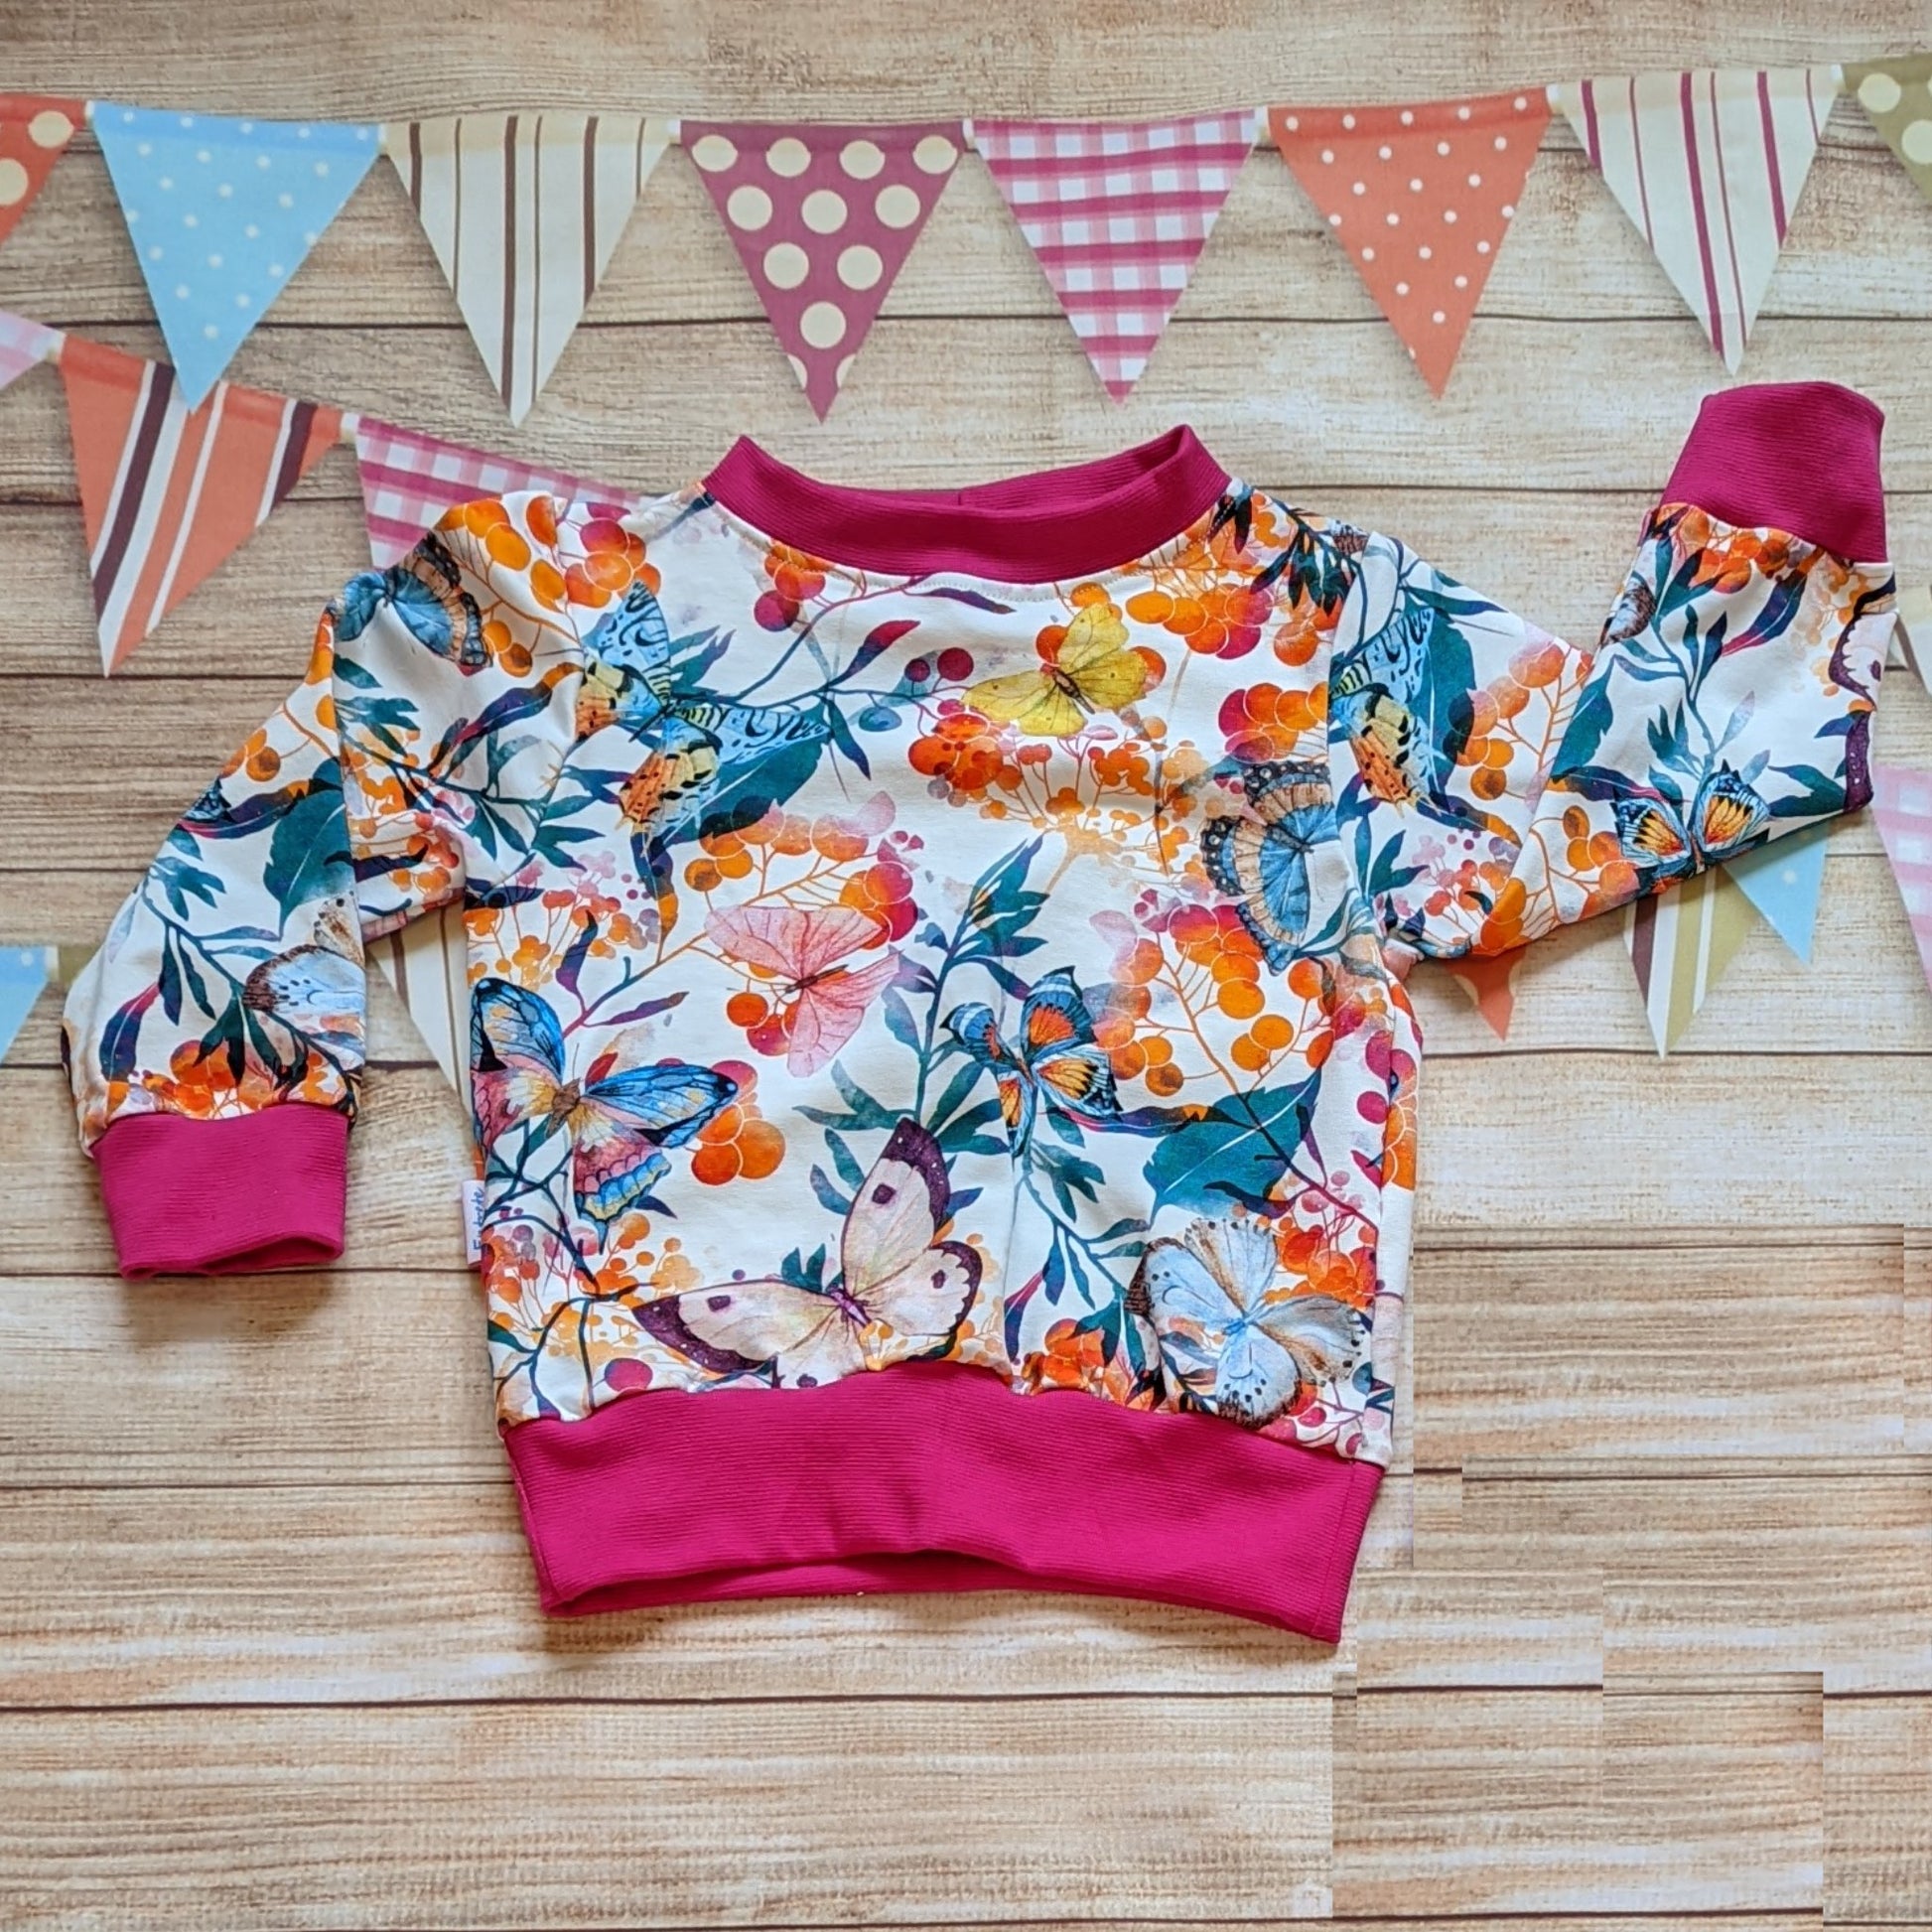 Long sleeve vibrant butterflies and flowers sweatshirt. Handmade using vibrant butterflies cotton jersey and fuchsia cotton ribbing.